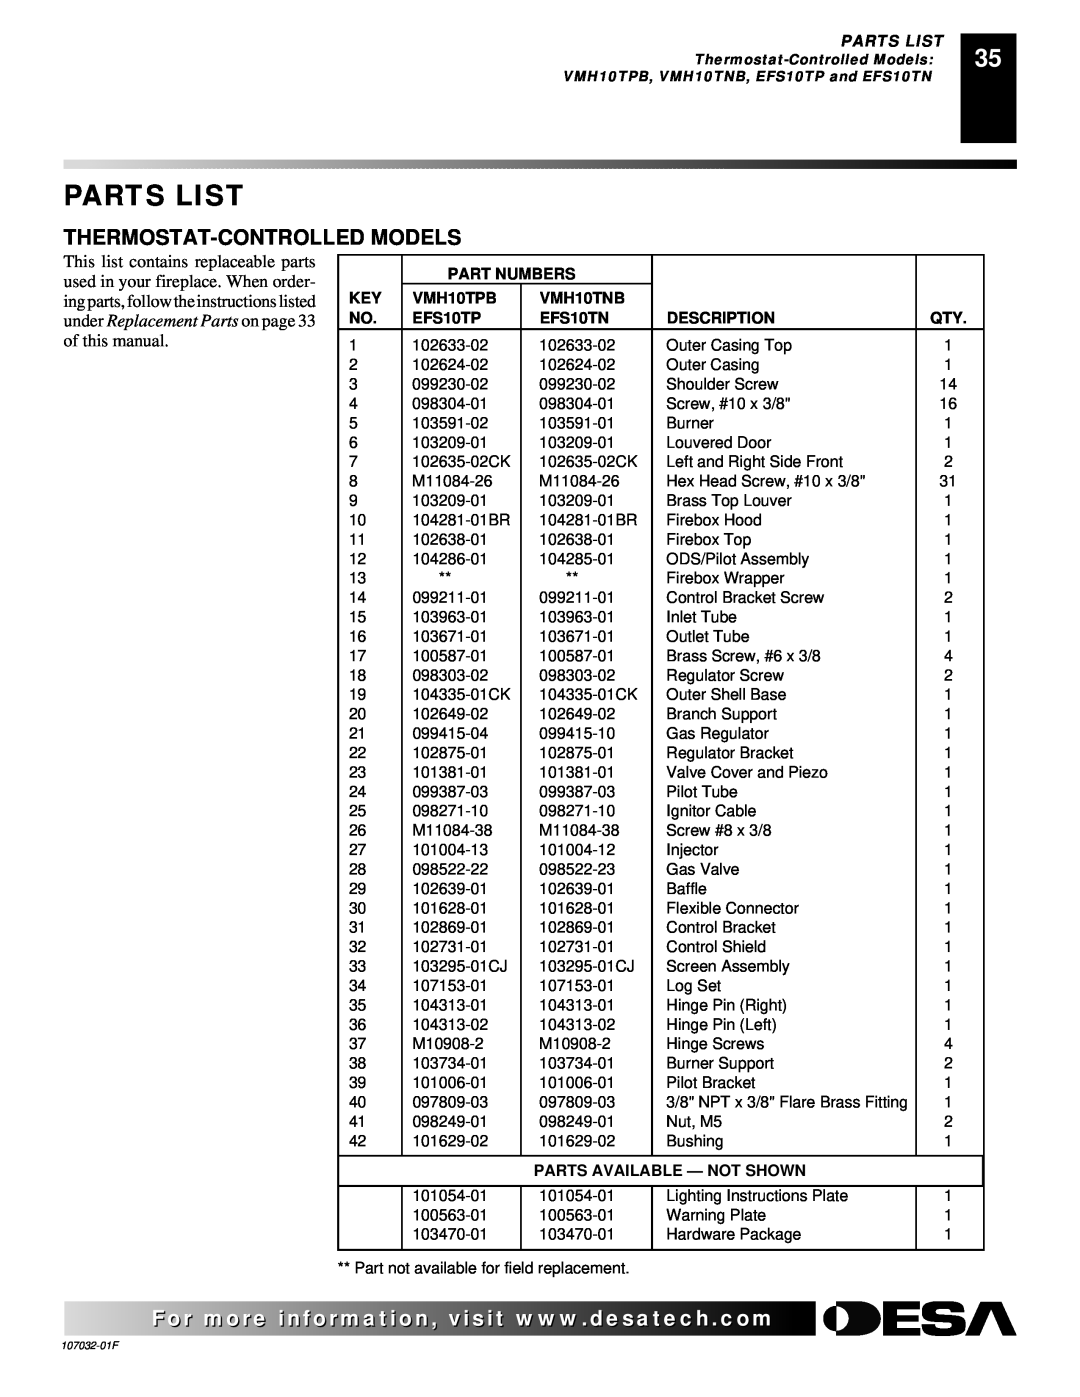 Desa VMH26NRA Parts List, Thermostat-Controlledmodels, Part Numbers, VMH10TPB, VMH10TNB, EFS10TP, EFS10TN, Description 